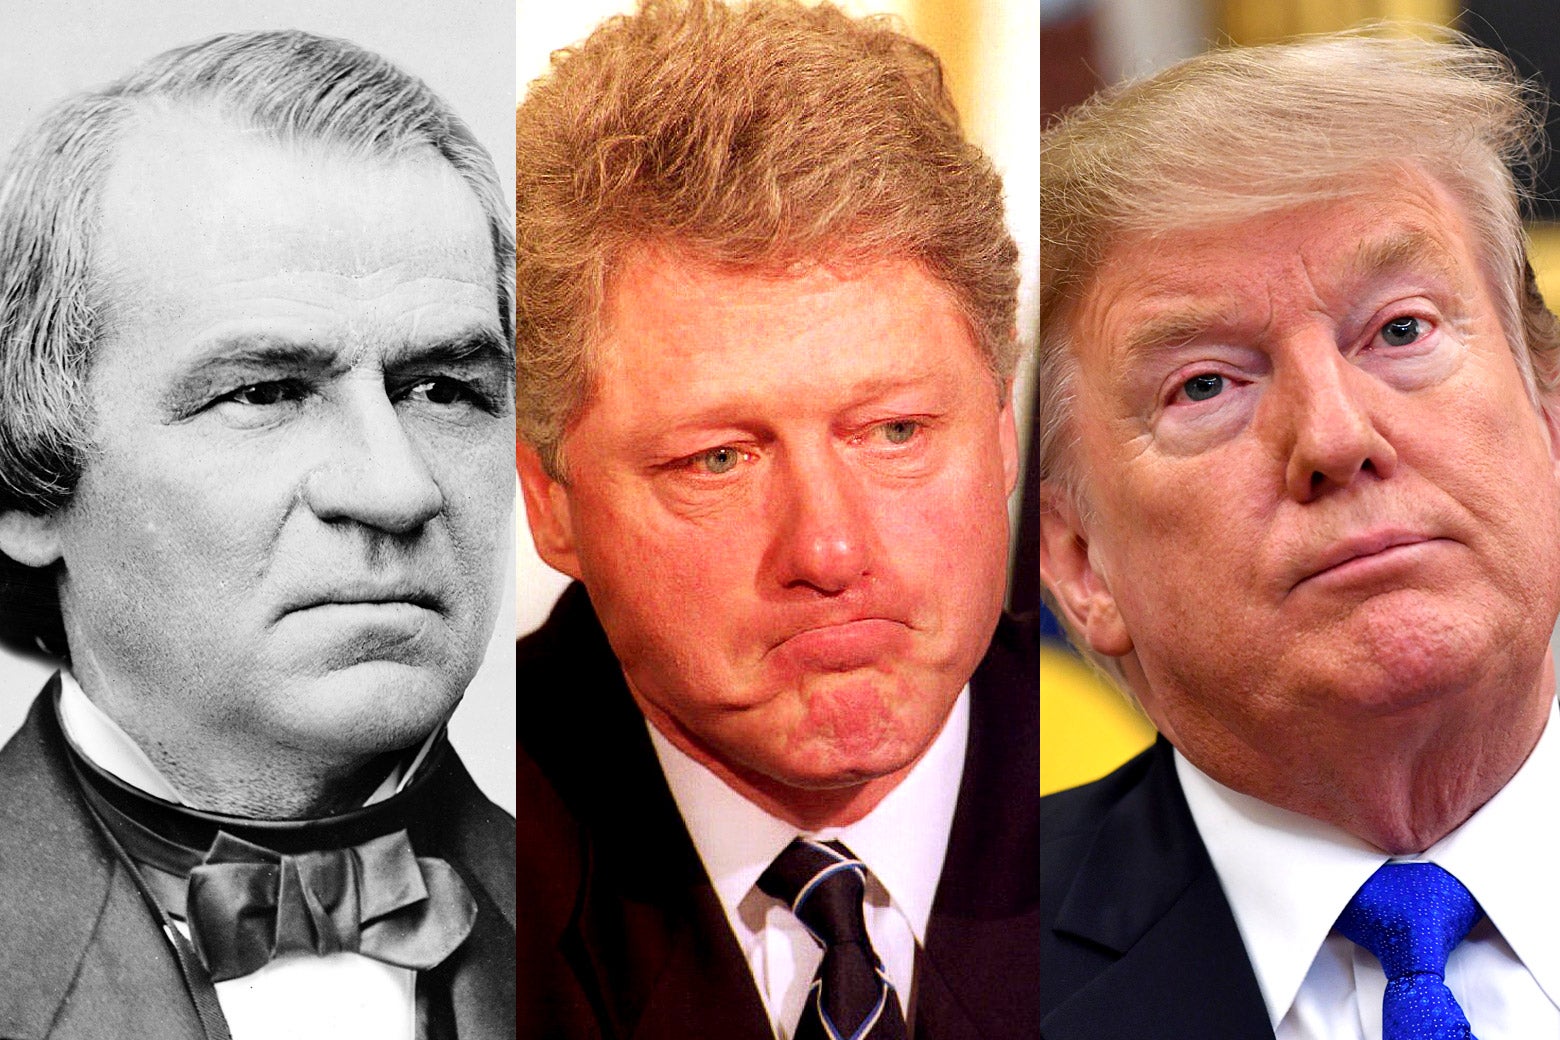 Andrew Johnson, Bill Clinton, and Donald Trump